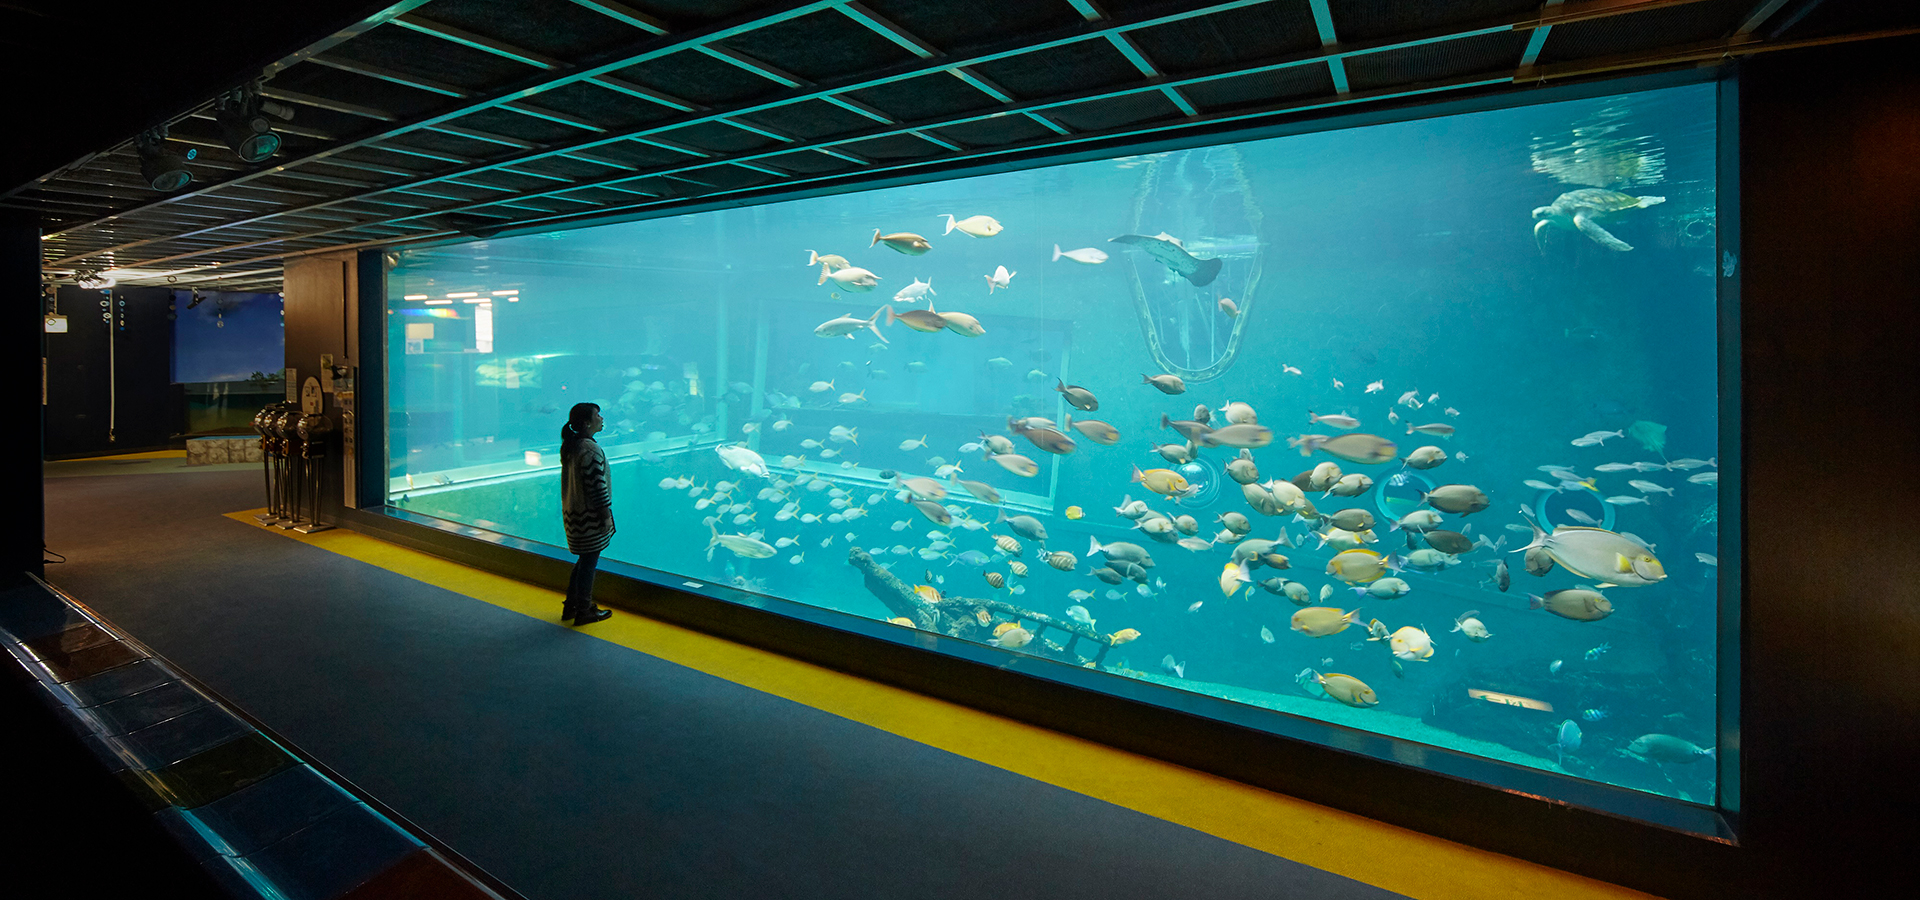 Hakone-en Aquarium